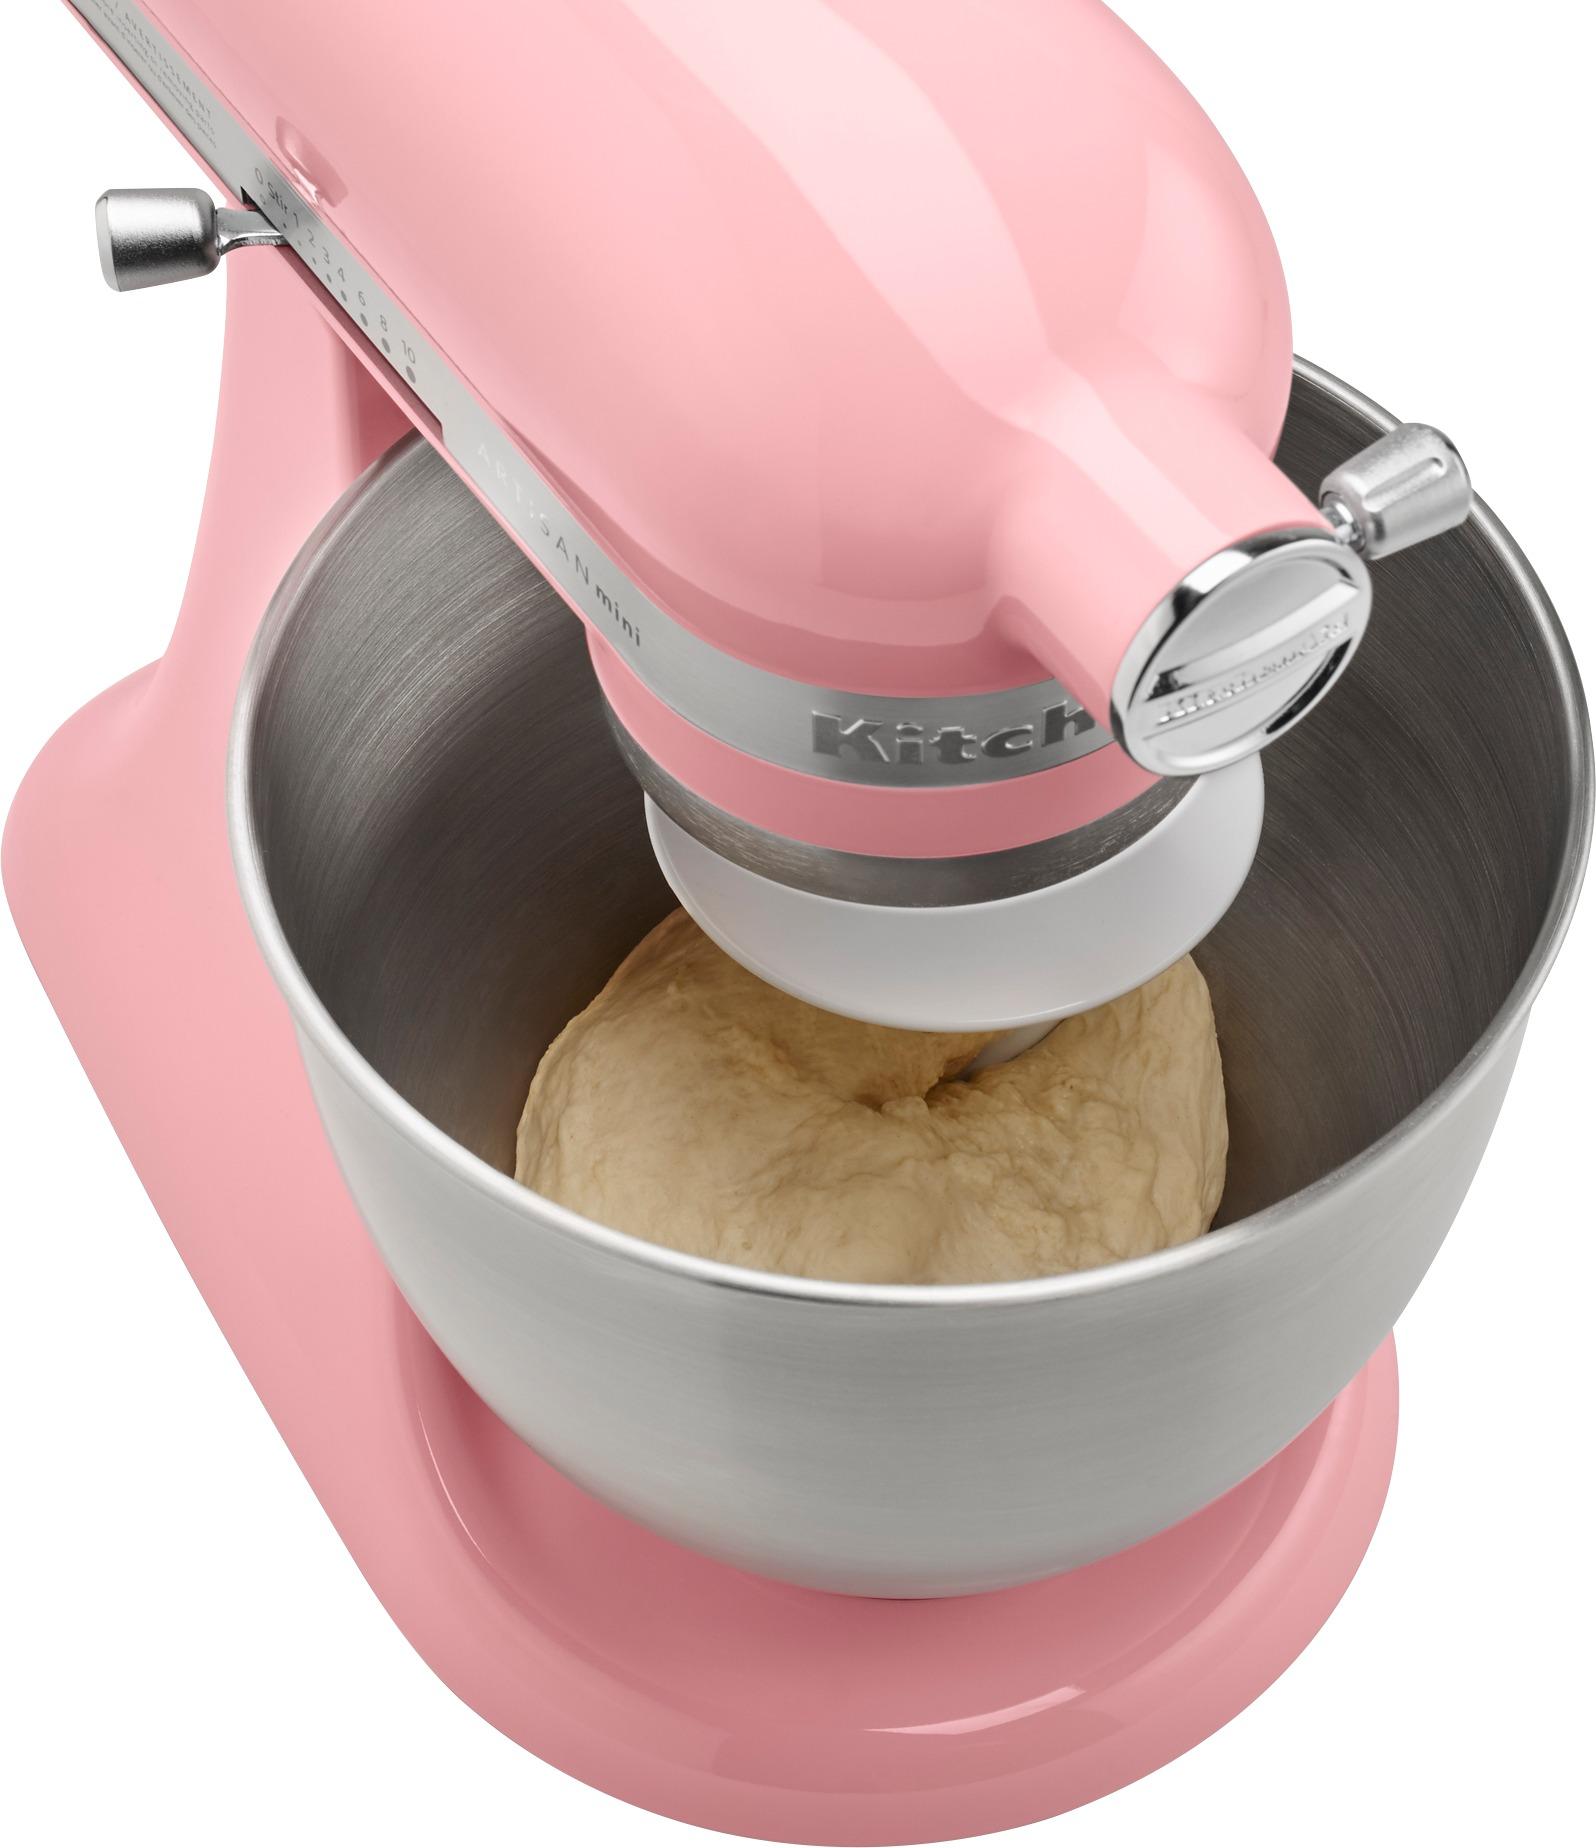  KitchenAid Ultra Power 5-Speed Hand Mixer, Guava Glaze